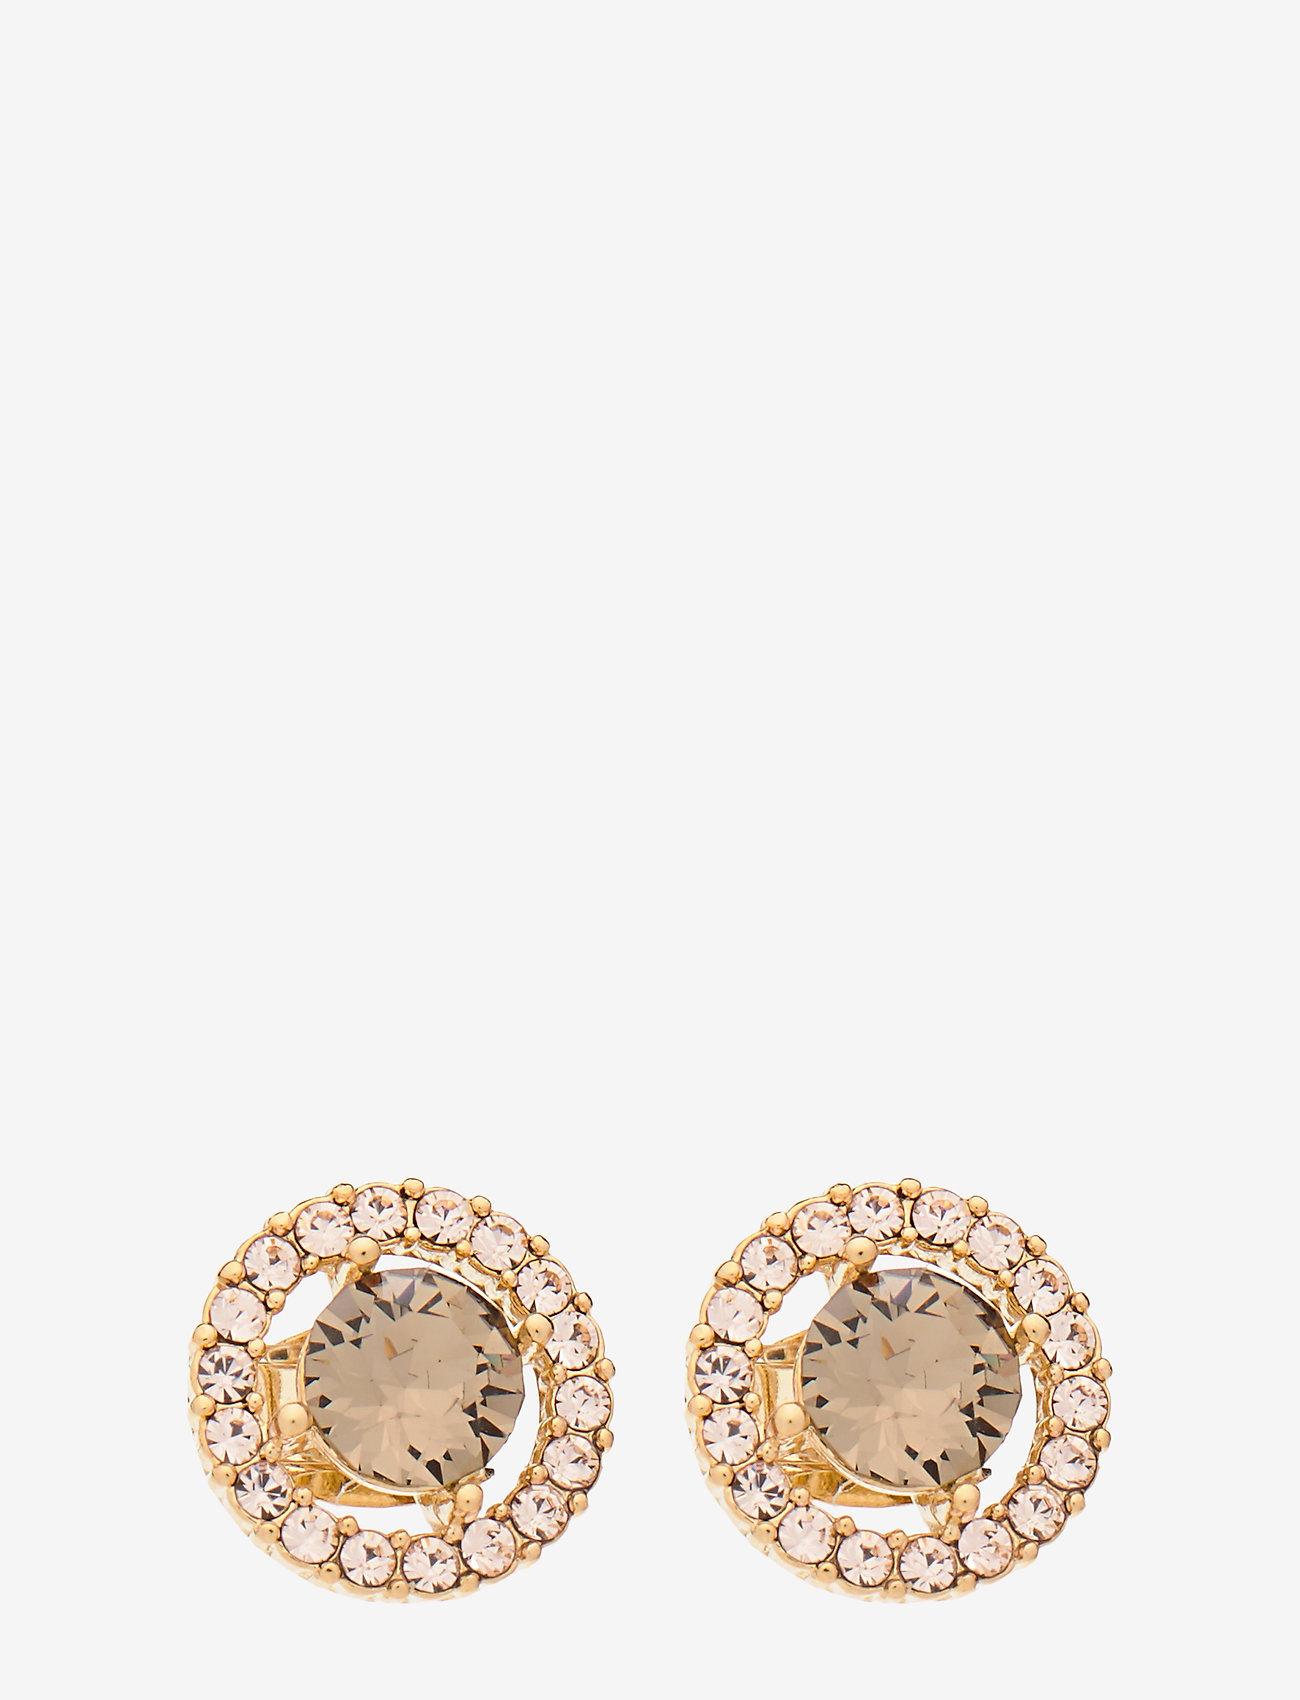 LILY AND ROSE Miss Miranda Earrings - Diamond Grey - Stud earrings ...